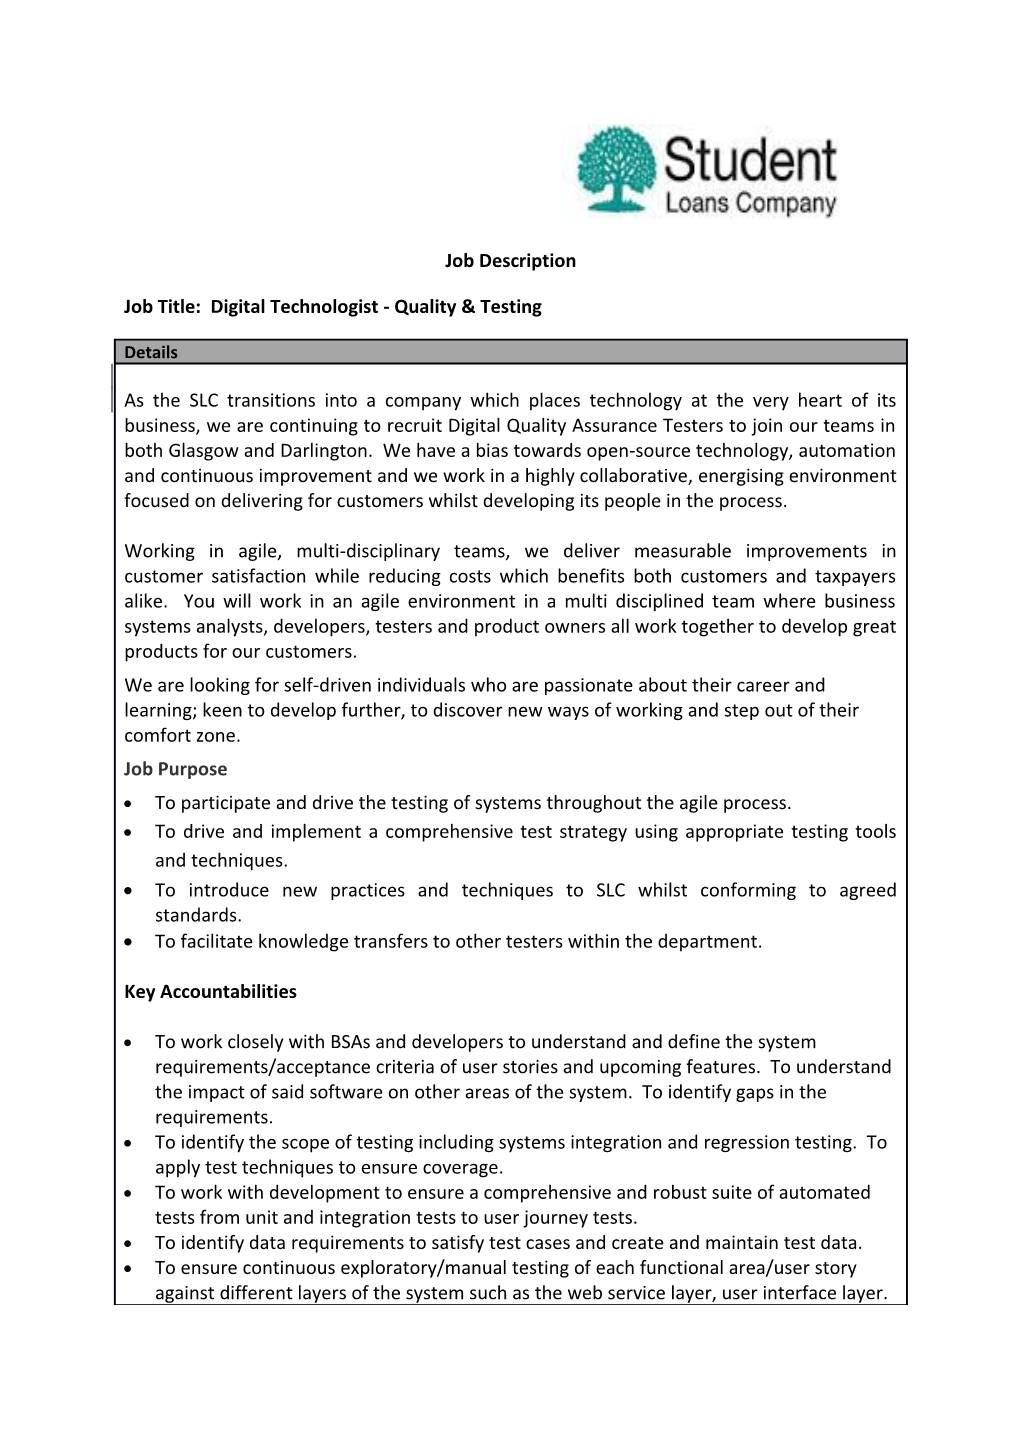 Job Title: Digital Technologist - Quality & Testing